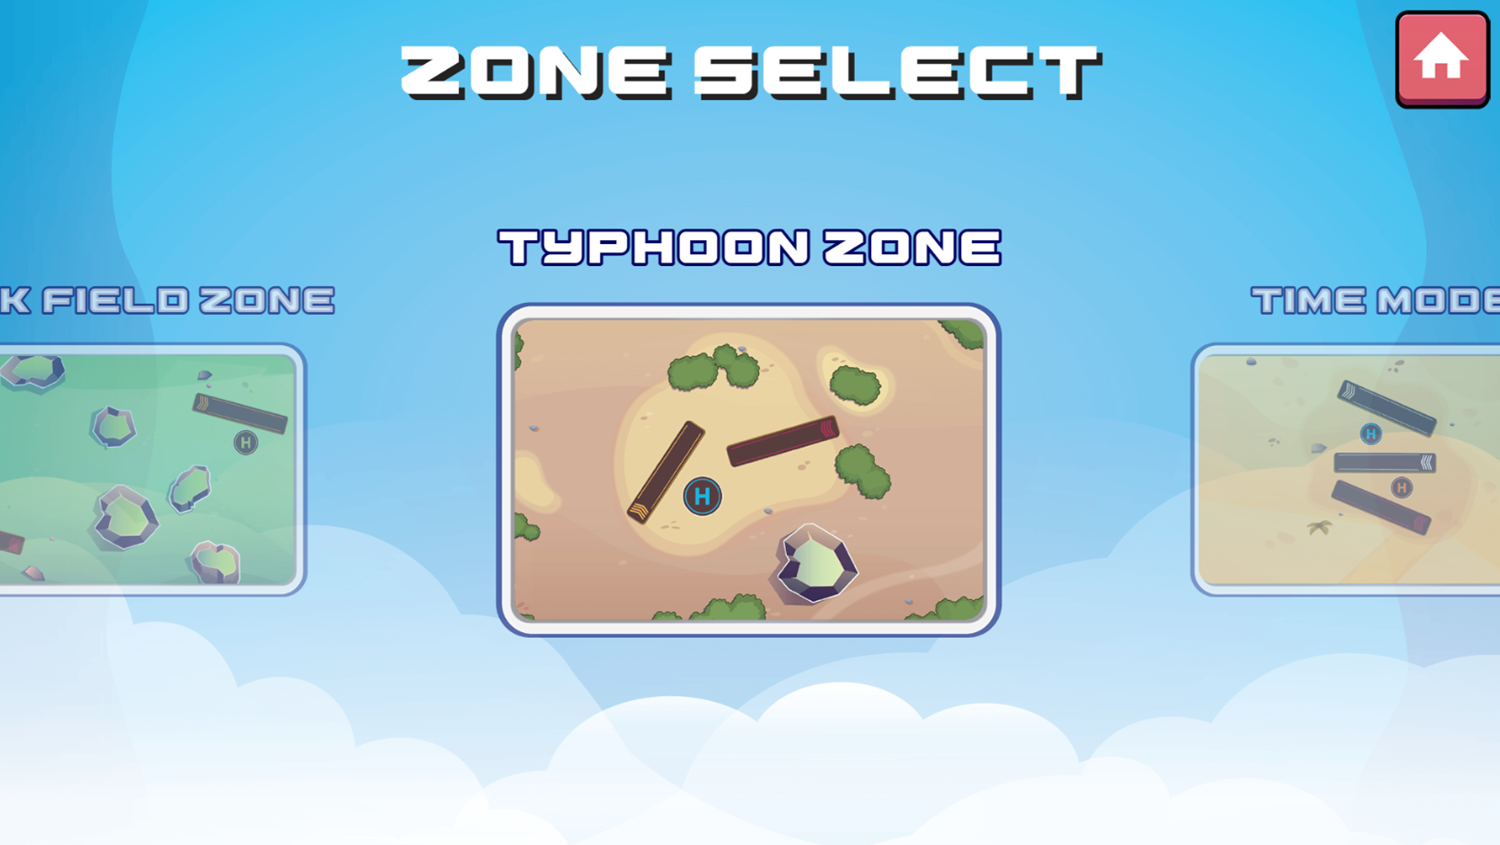 Air Traffic Control Game Zone Select Screen Screenshot.